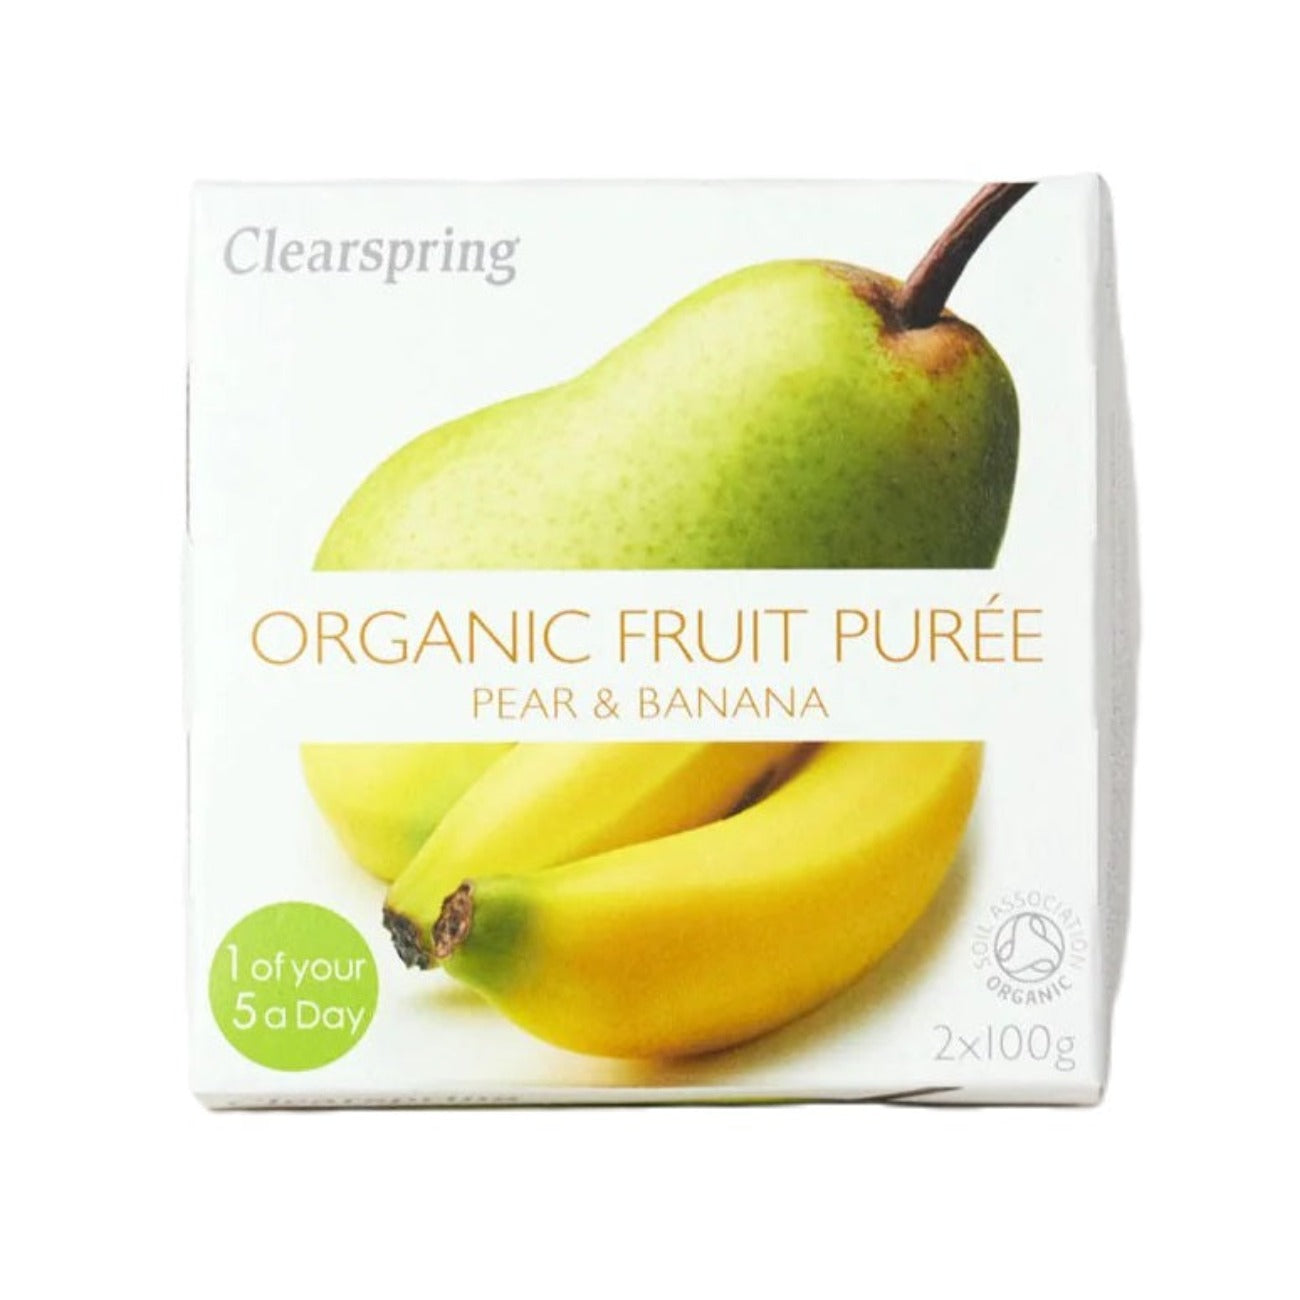 Organic Pear and Banana Fruit Puree 2x100g